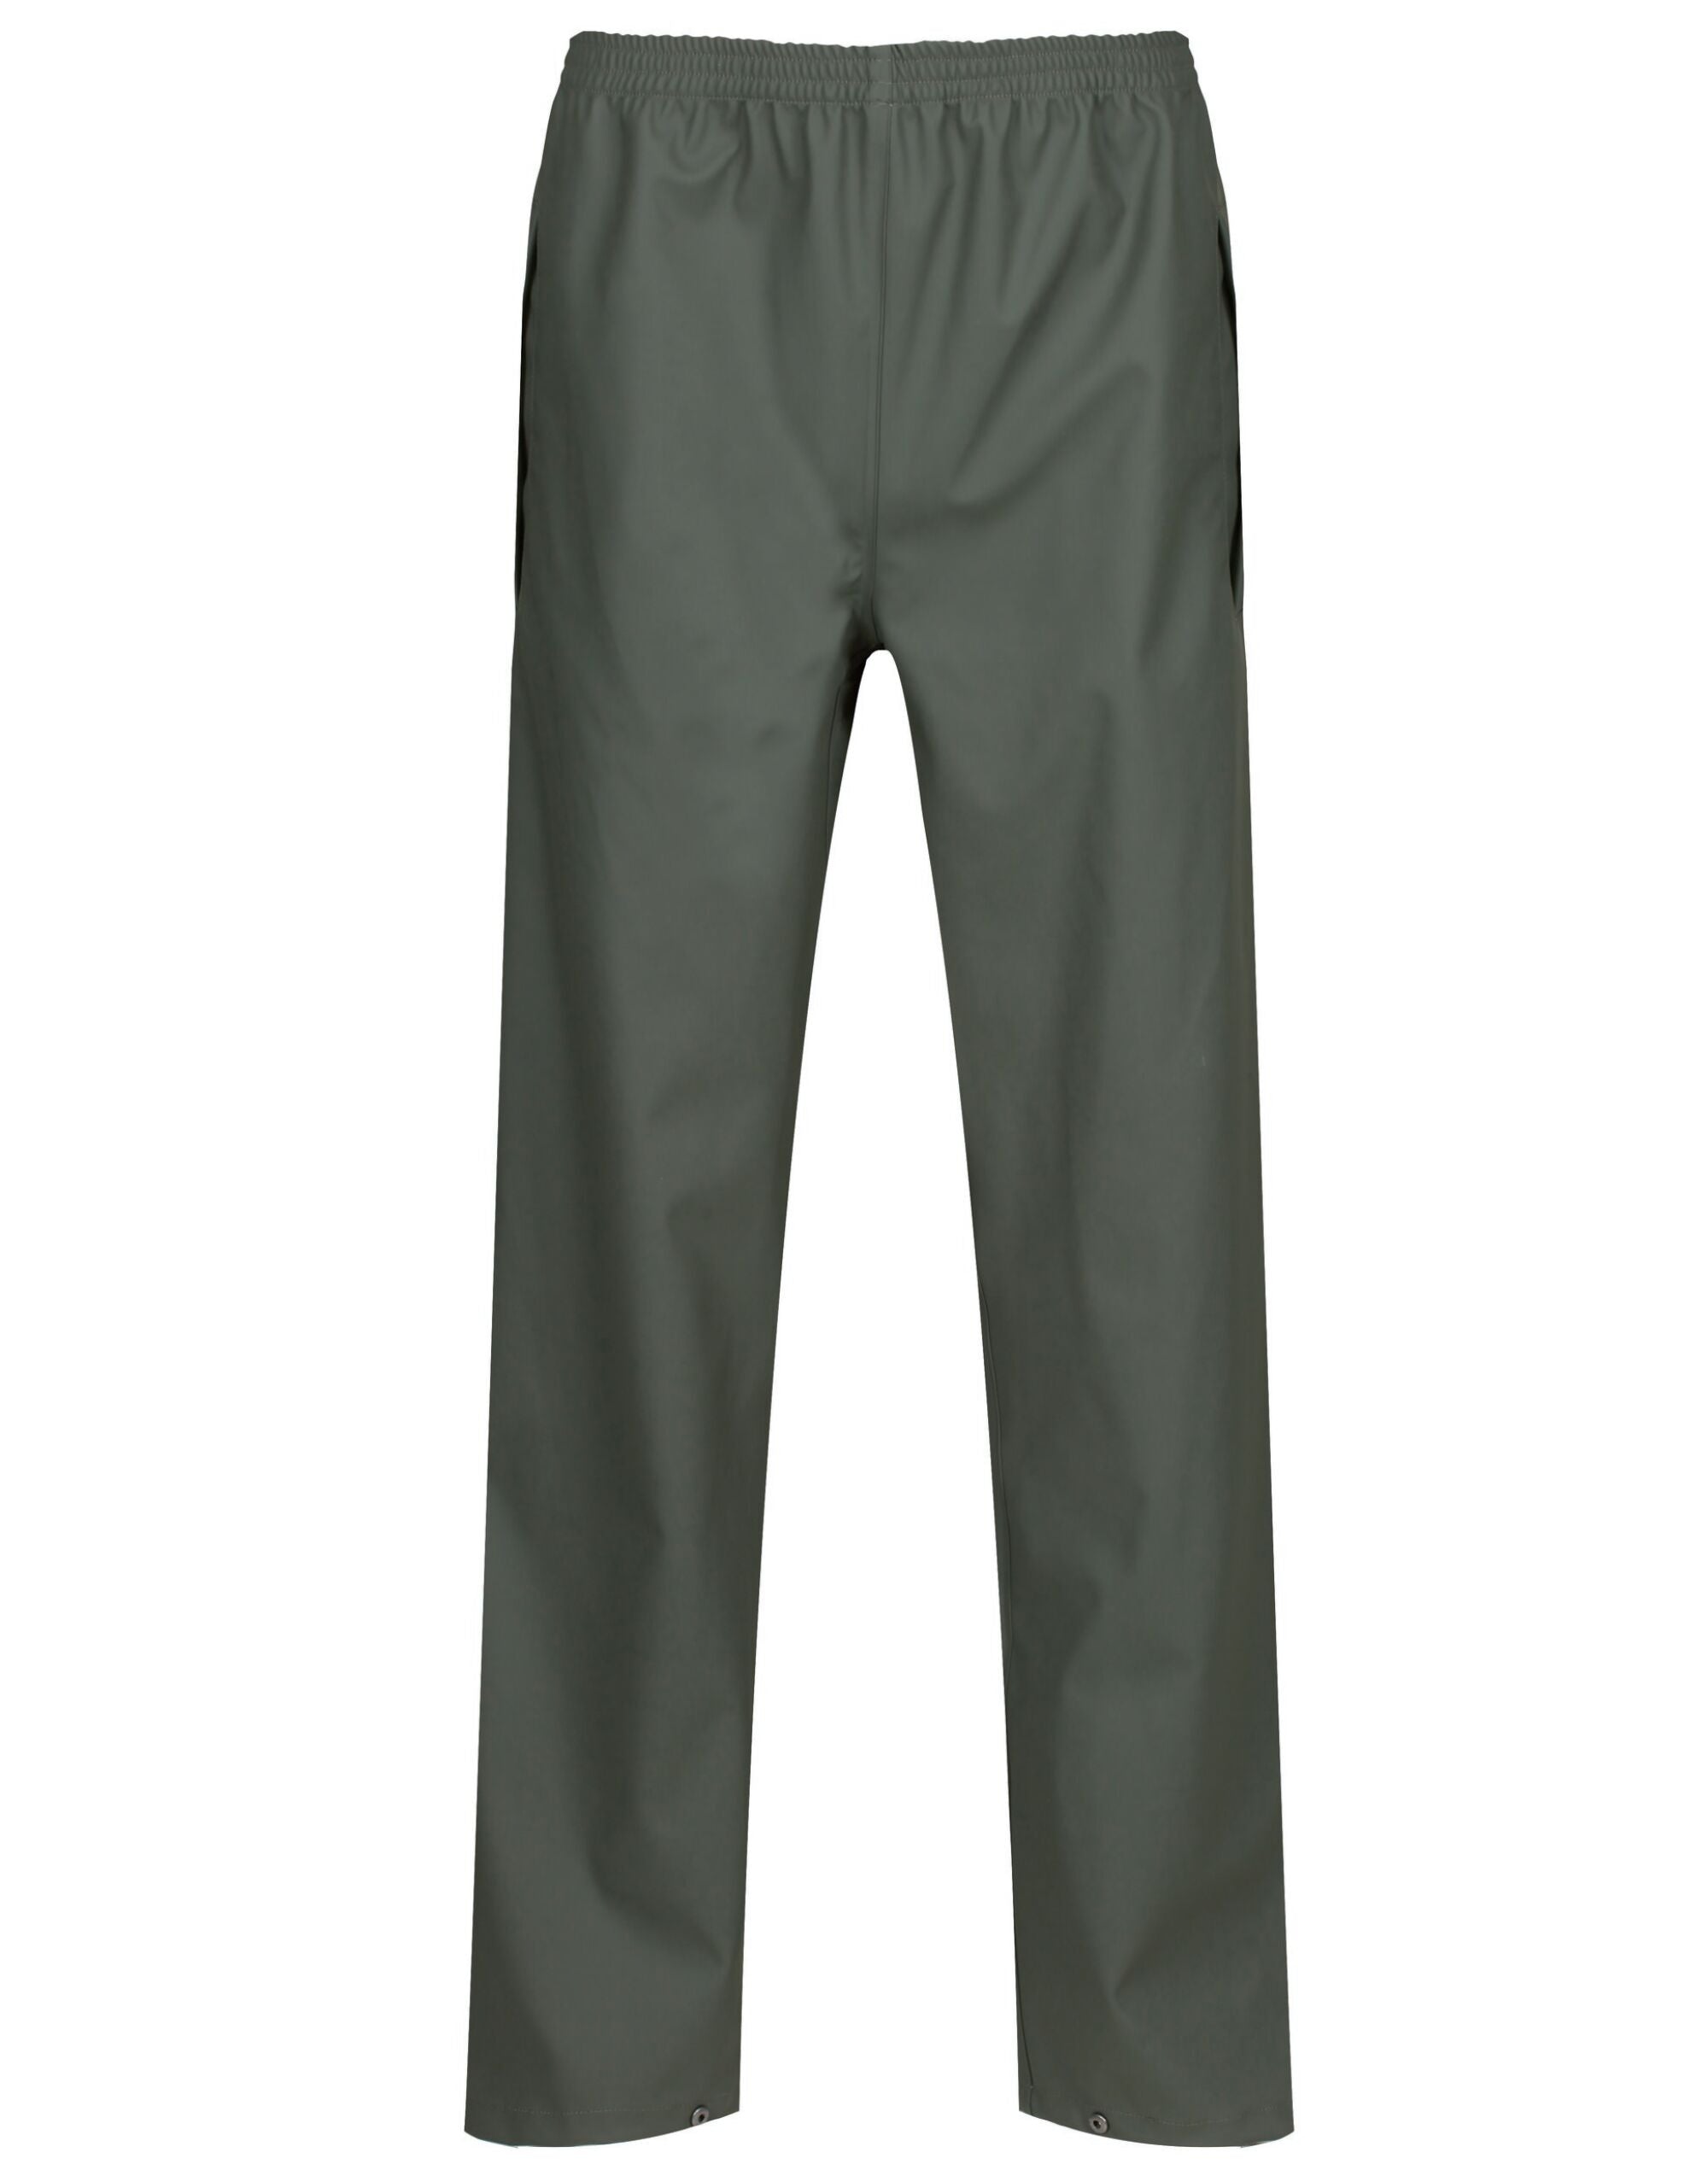 REGATTA PROFESSIONAL Stormflex II Trousers (Reg) Waterproof and windproof PU coated fabric (TRW322)